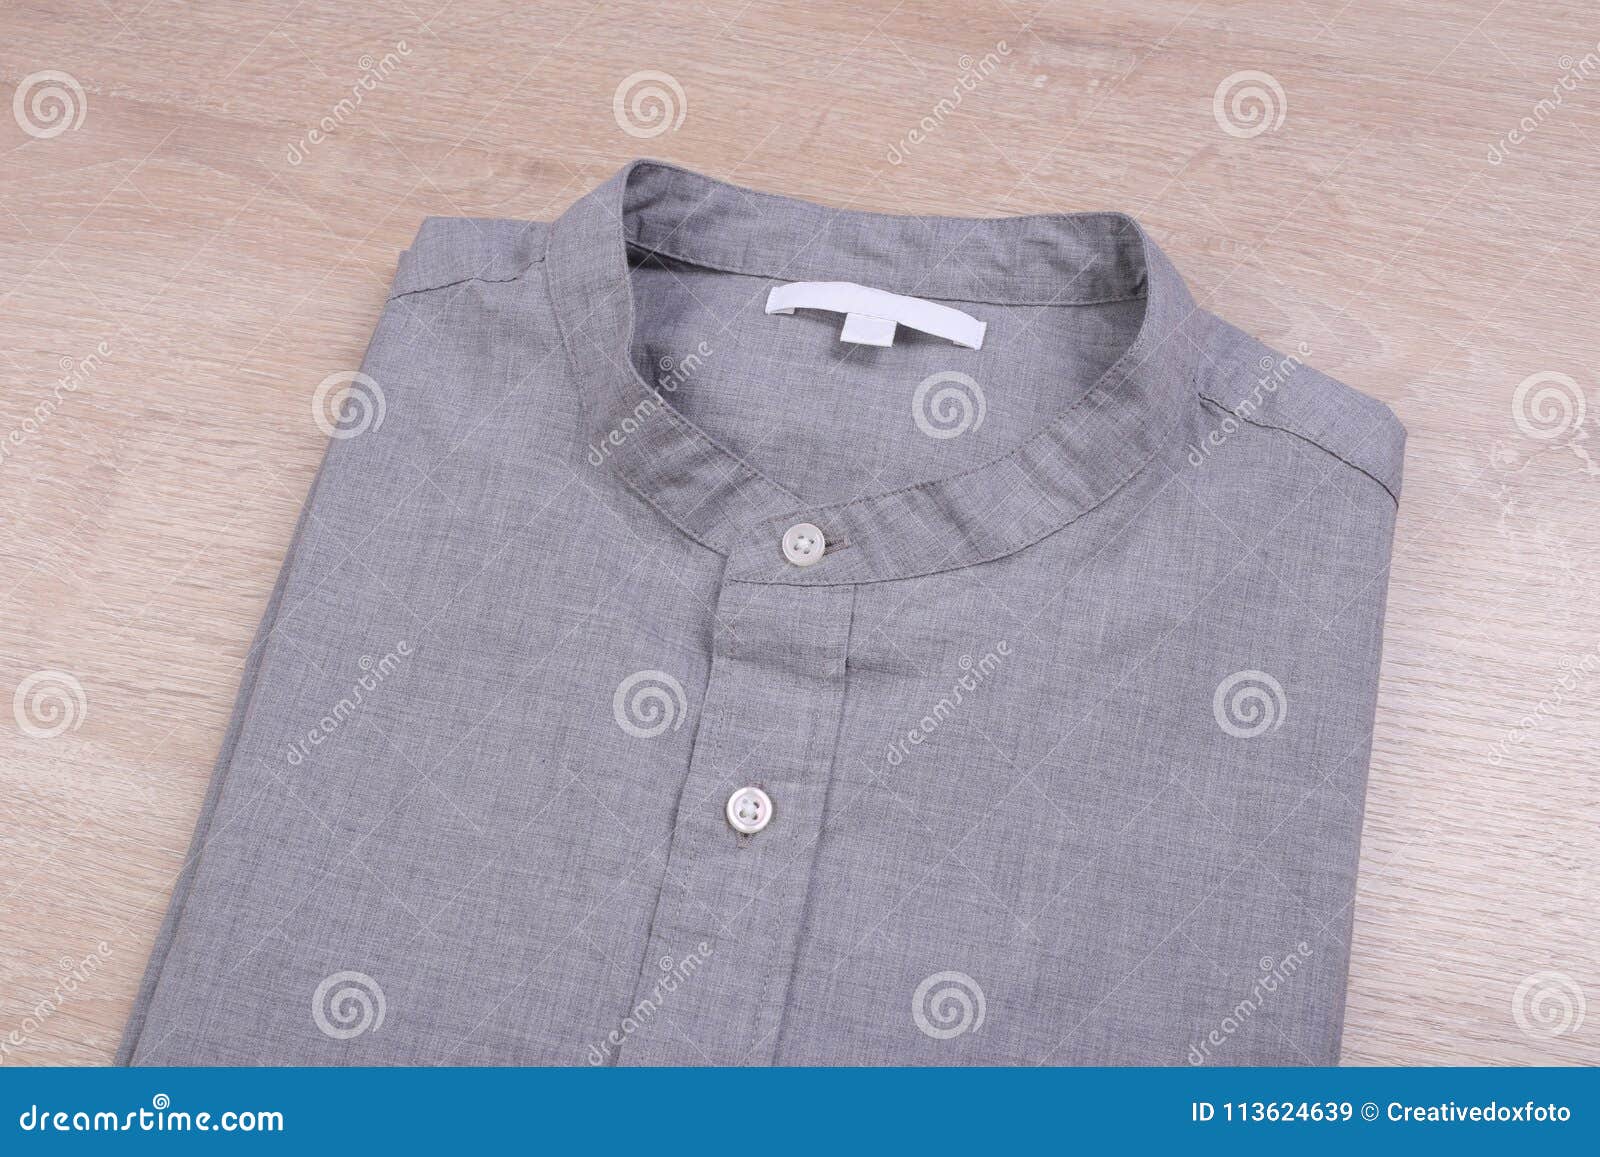 Folded gray casual shirt stock image. Image of garment - 113624639